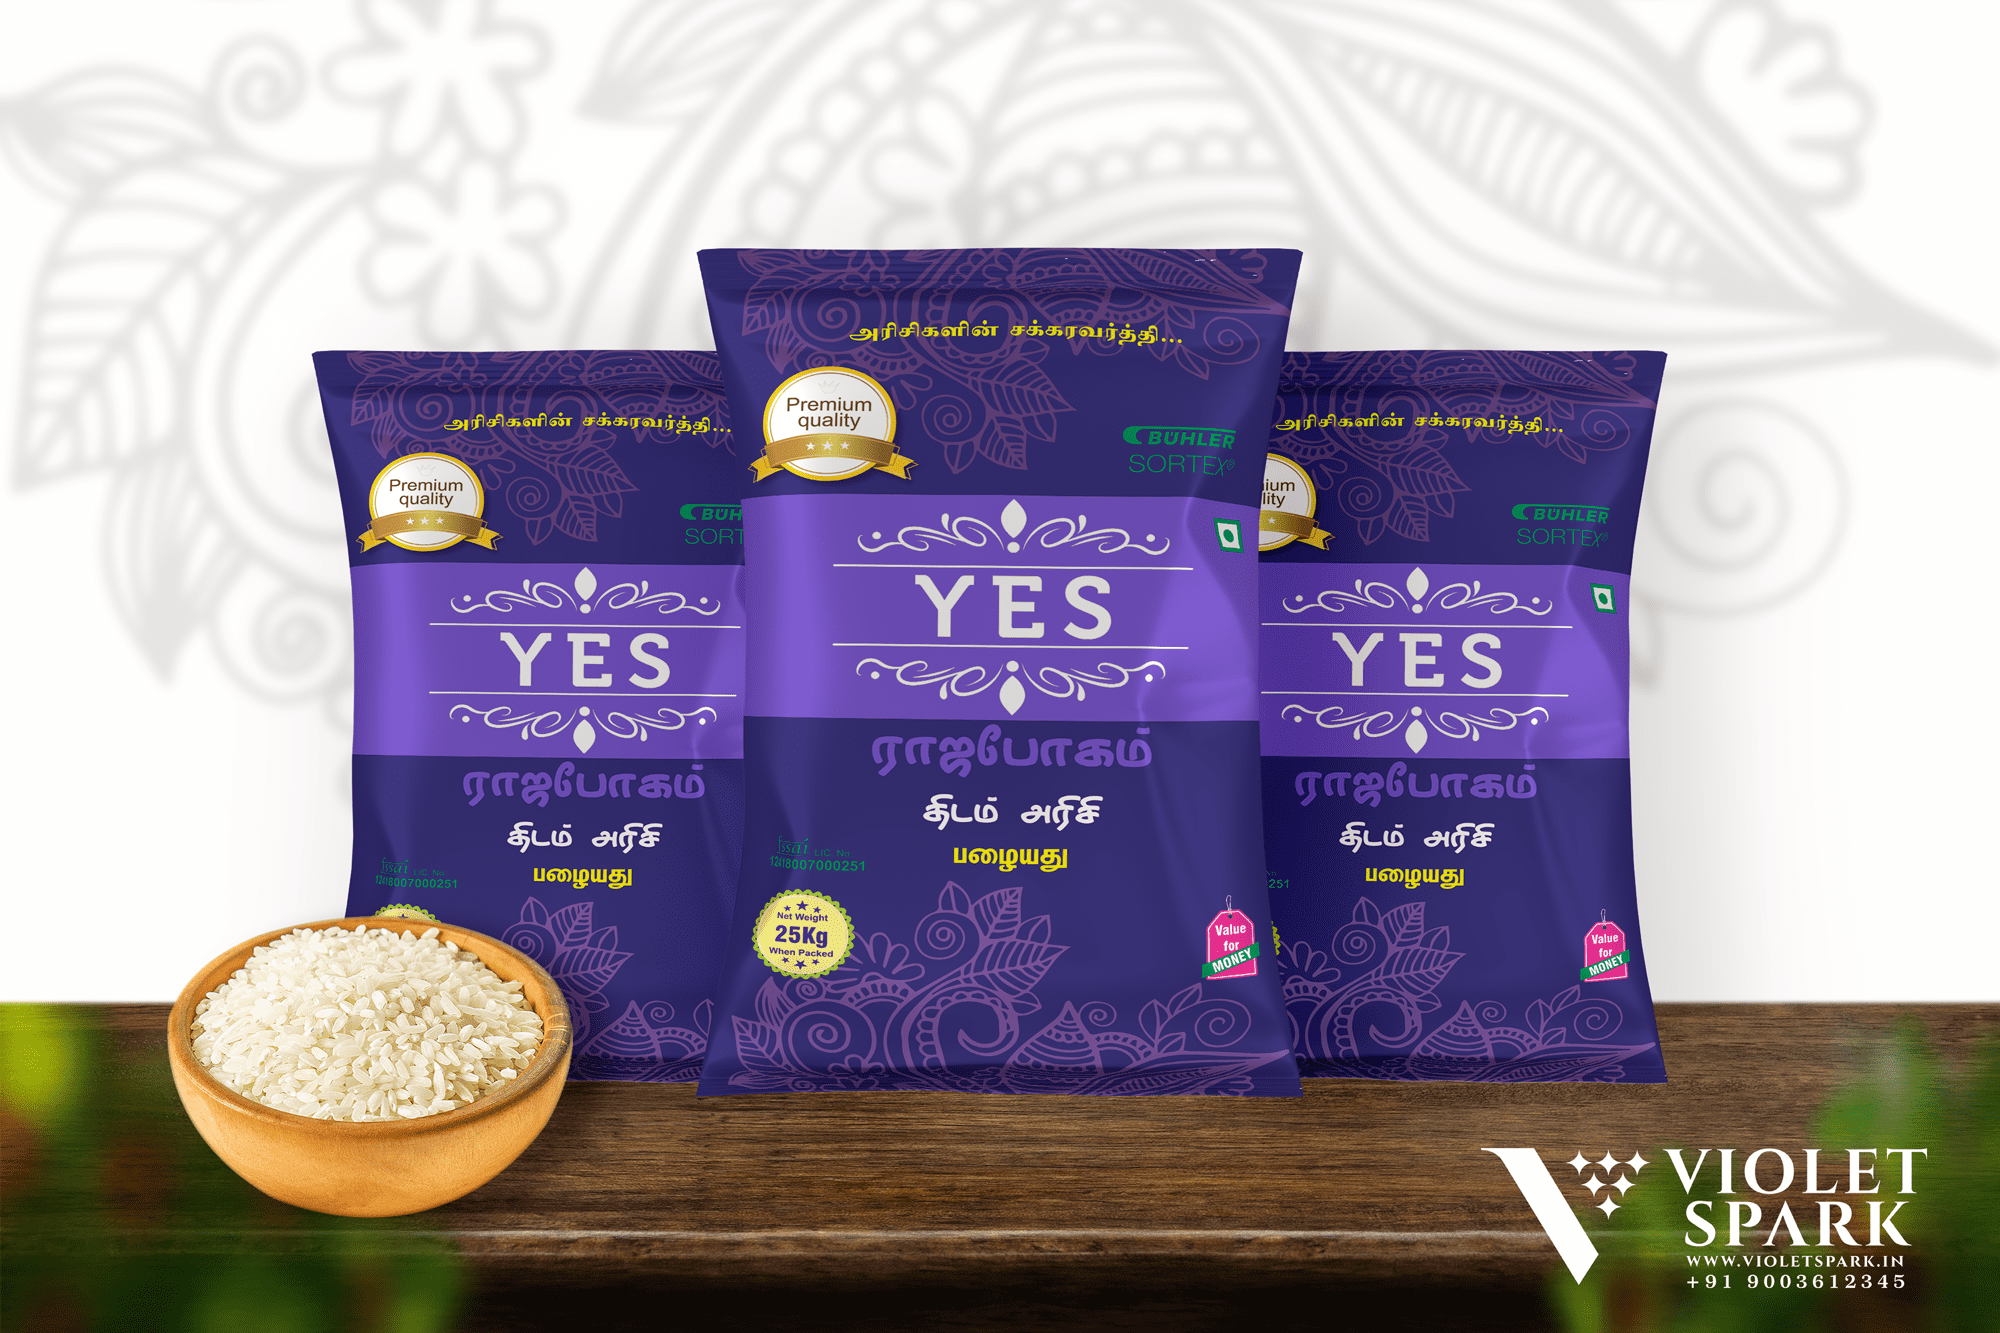 Yes Brand Rajabhogam Rice Branding & Packaging Design in Salem by Creative Prints thecreativeprints